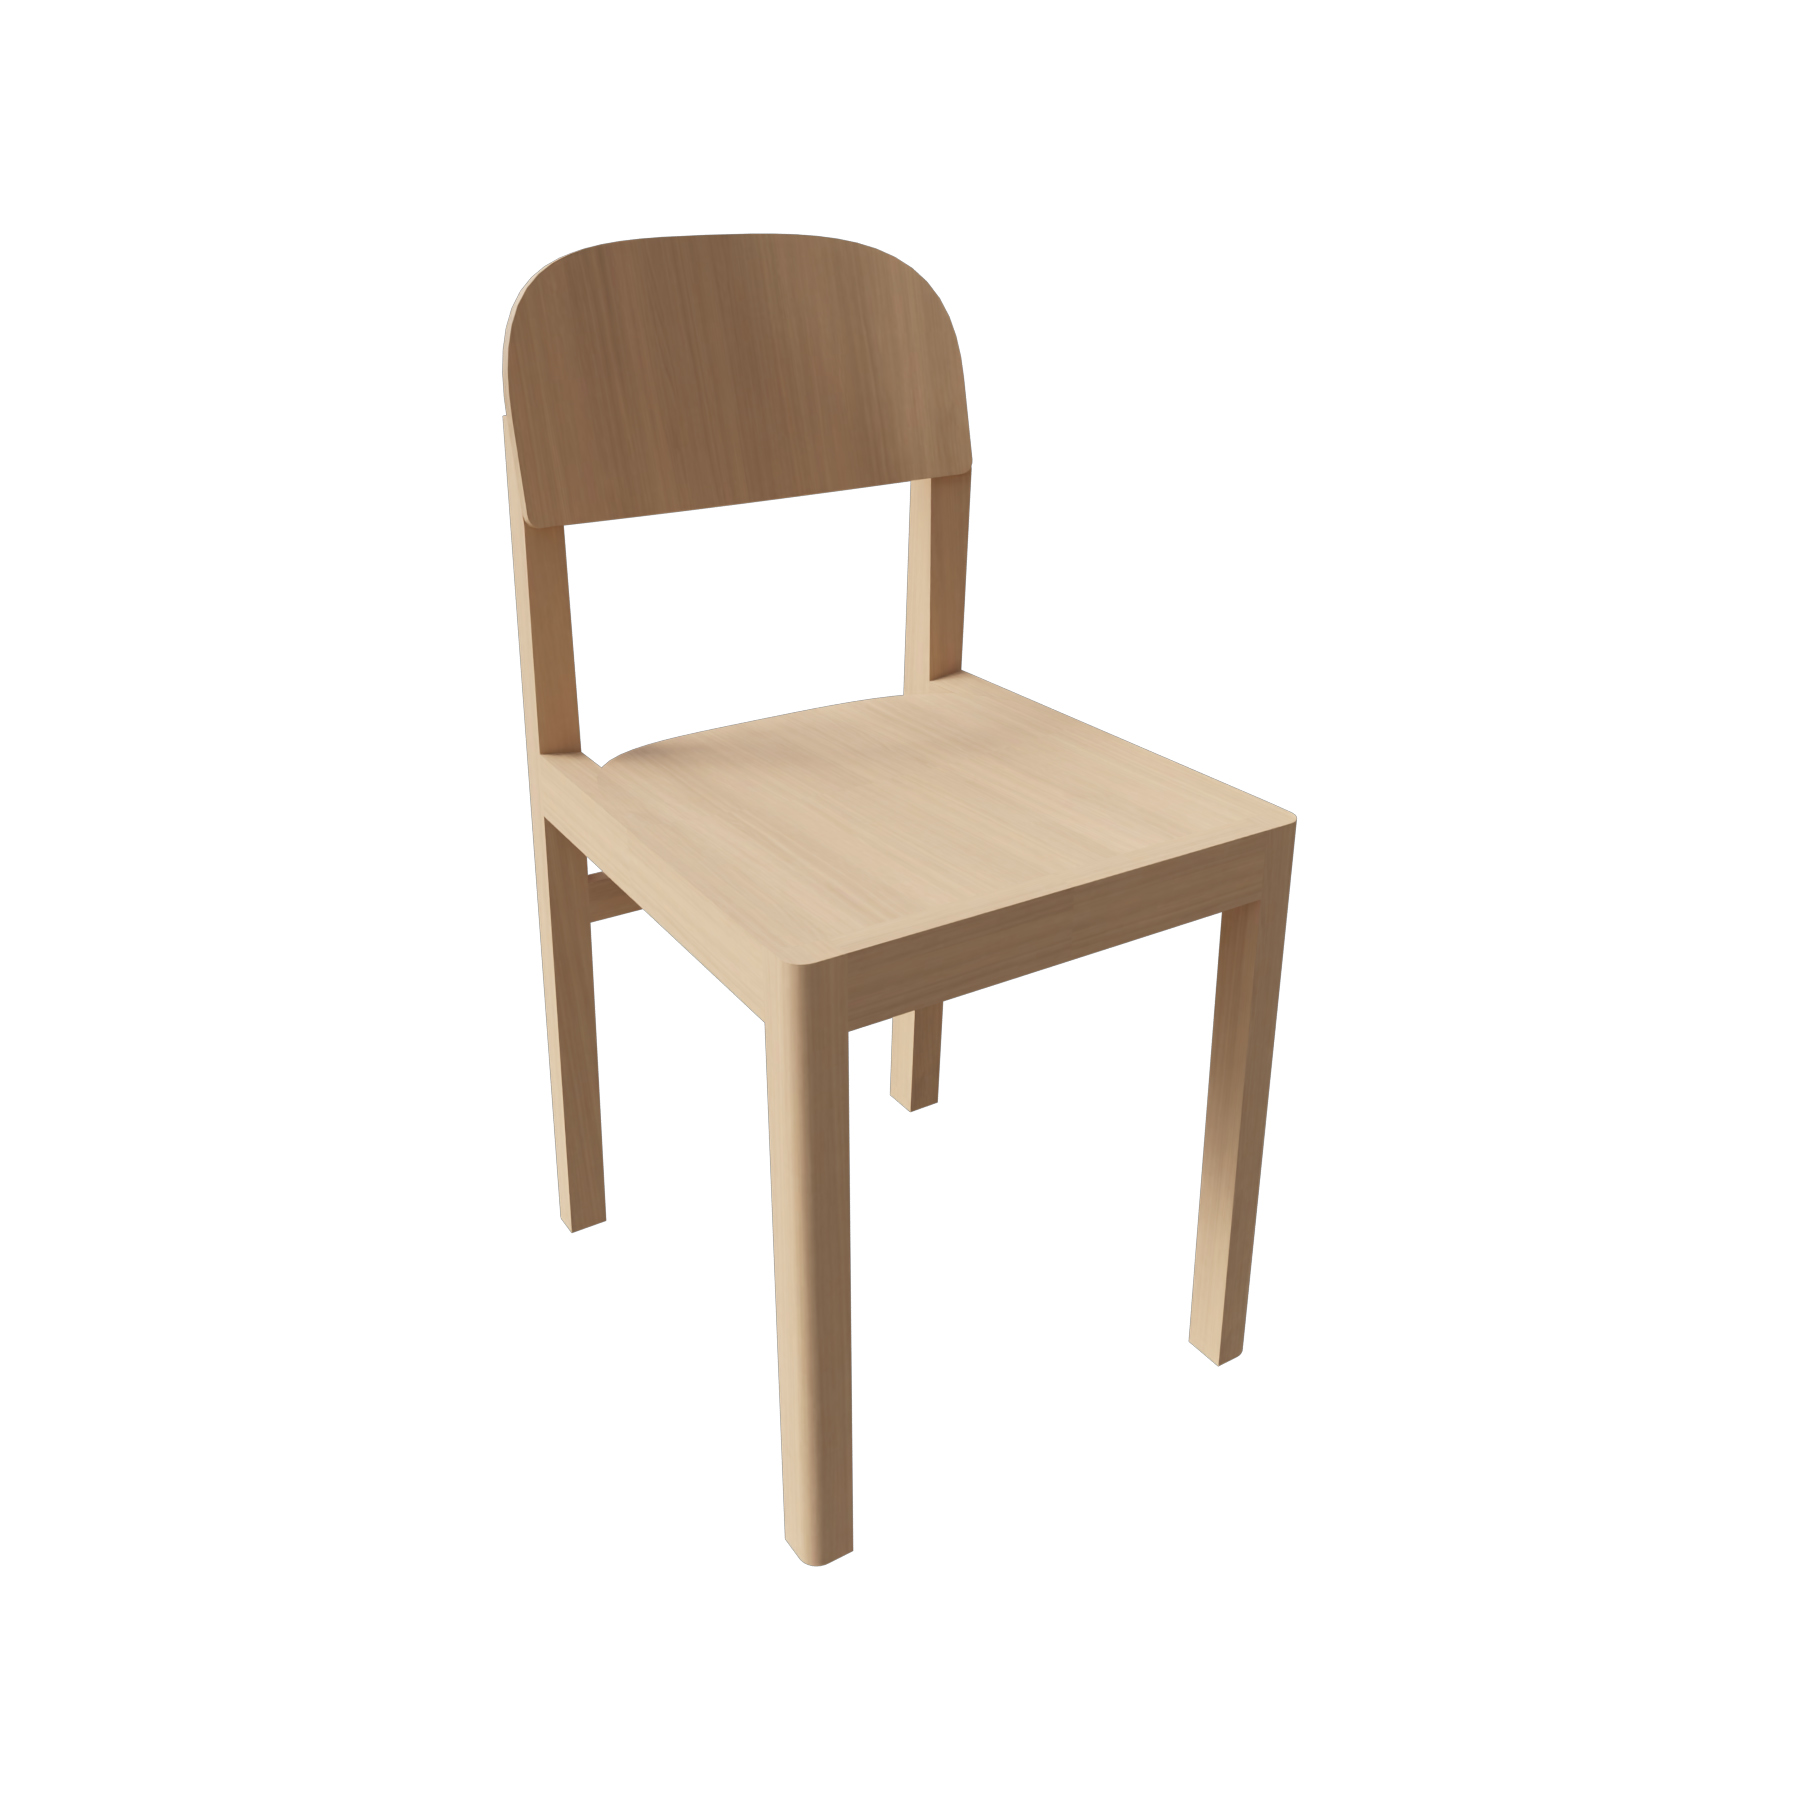 Workshop Chair 26051